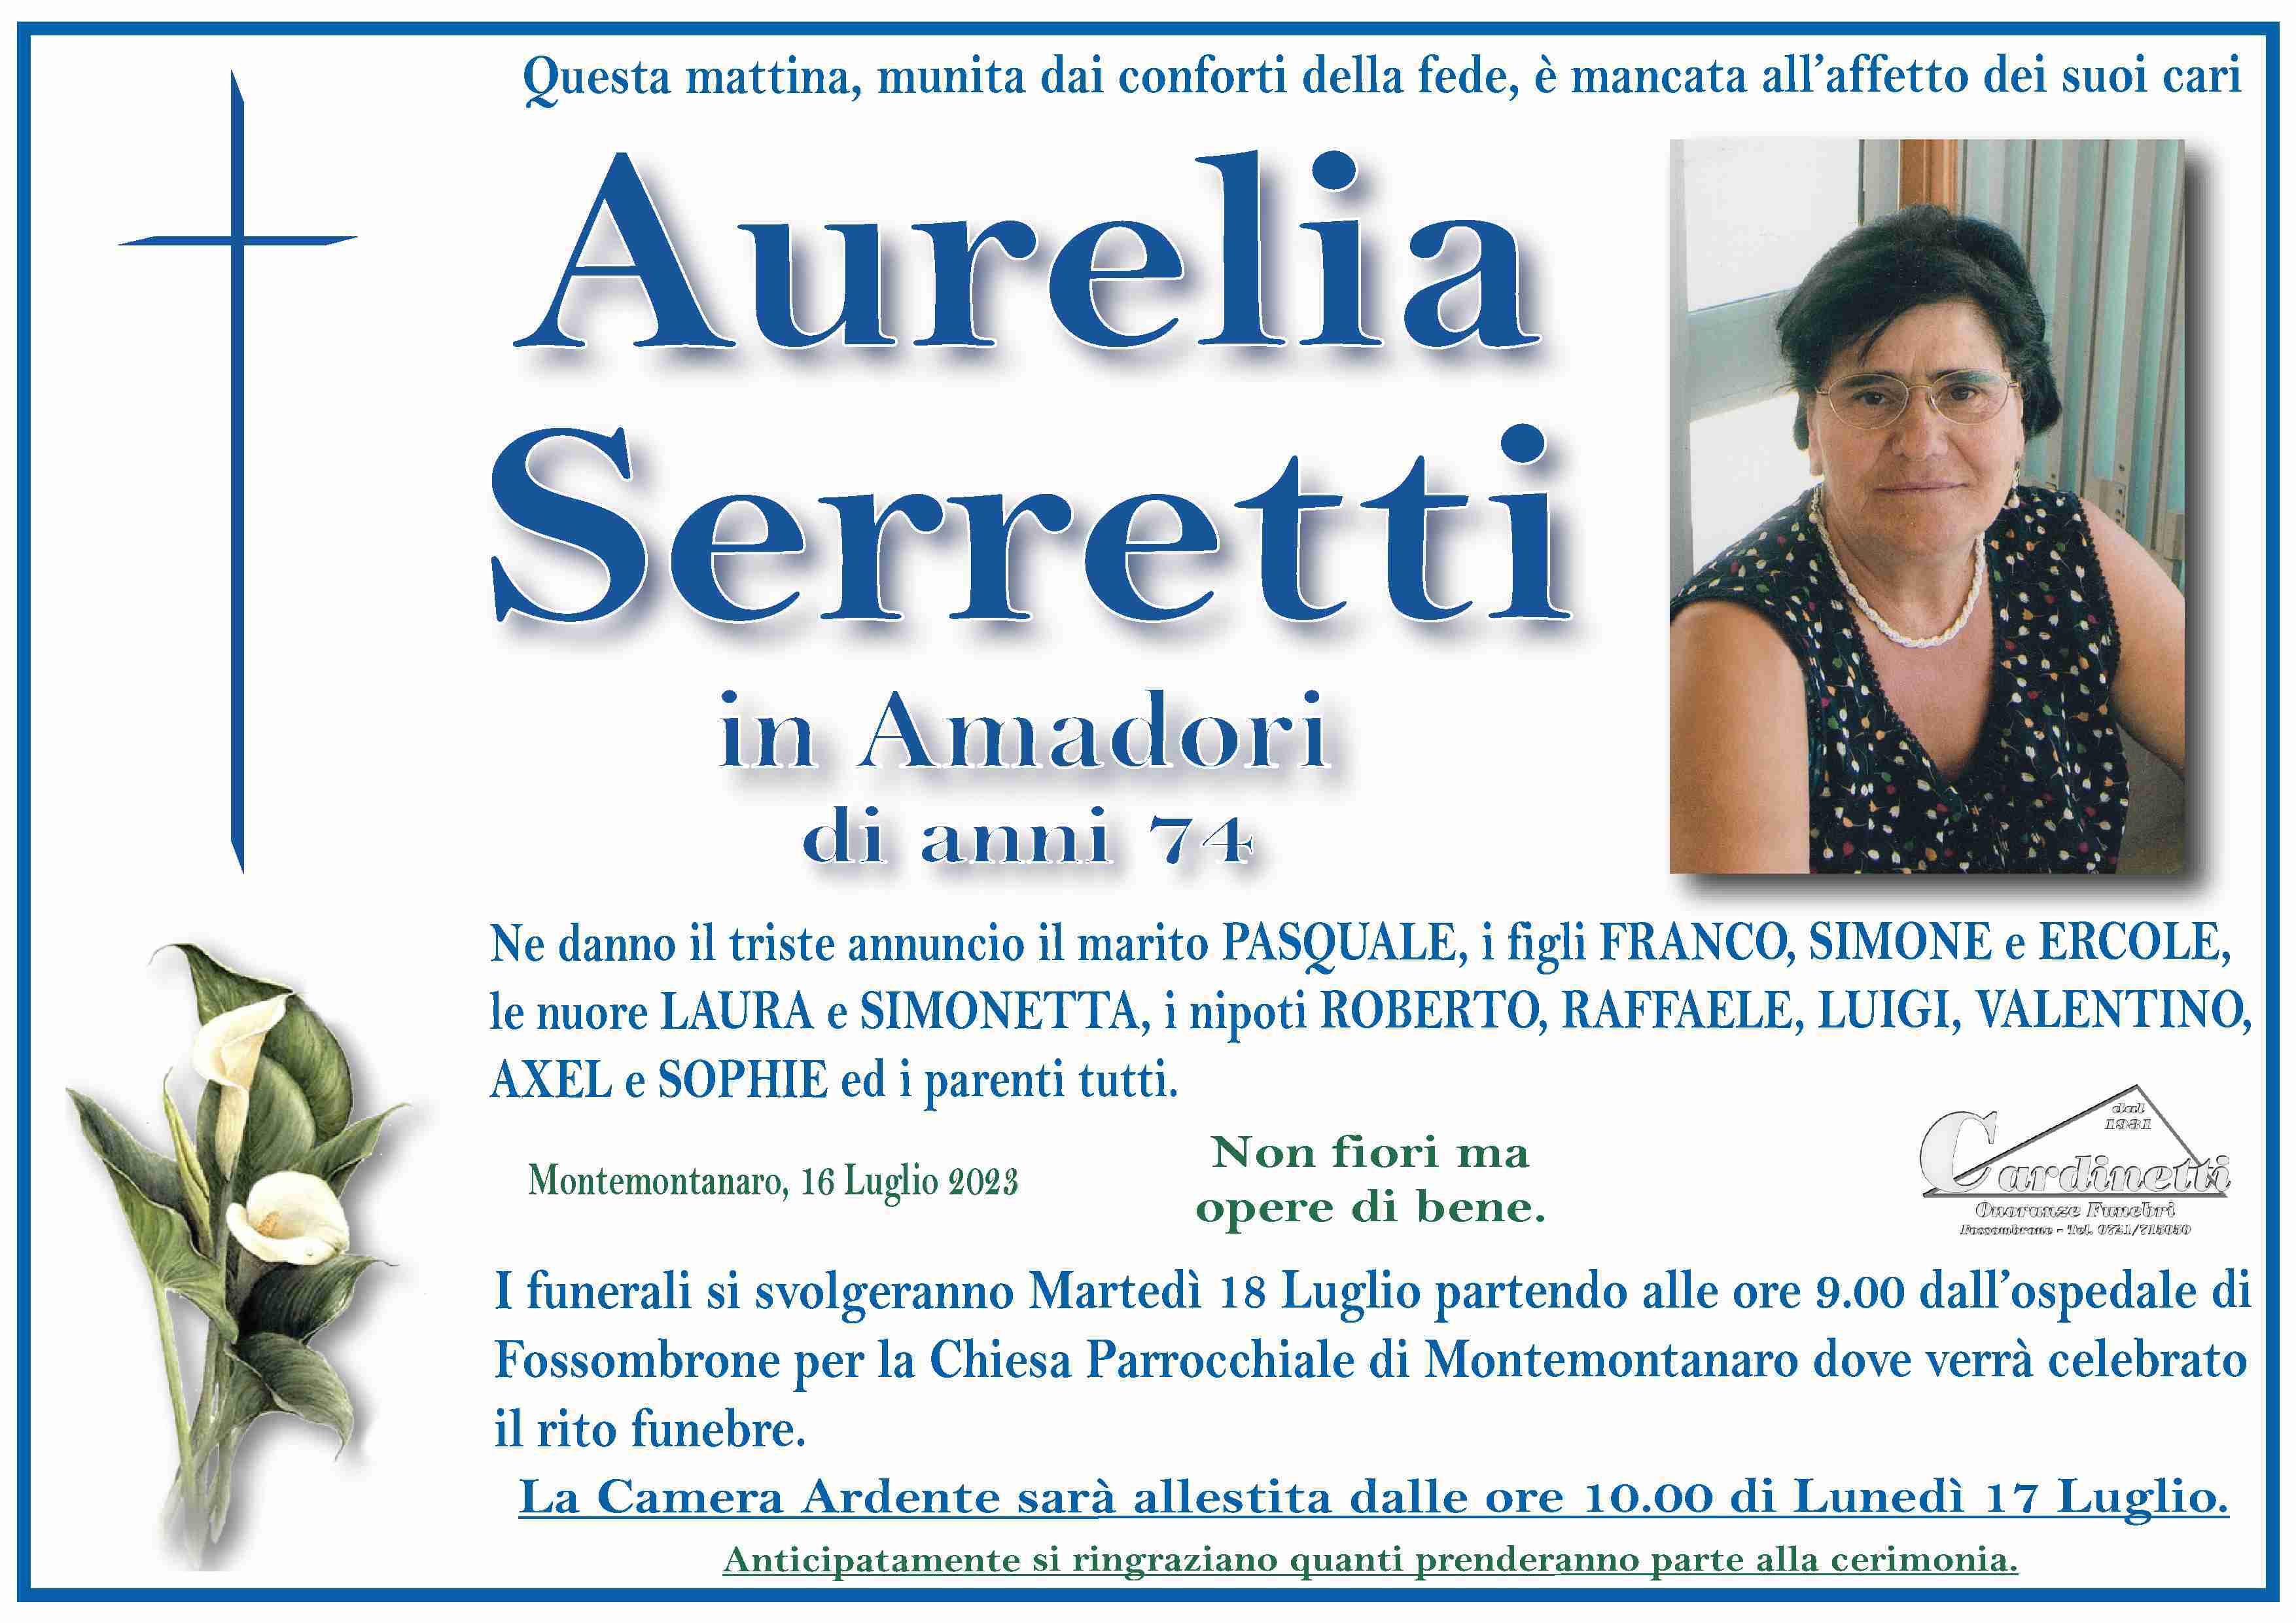 Aurelia Serretti